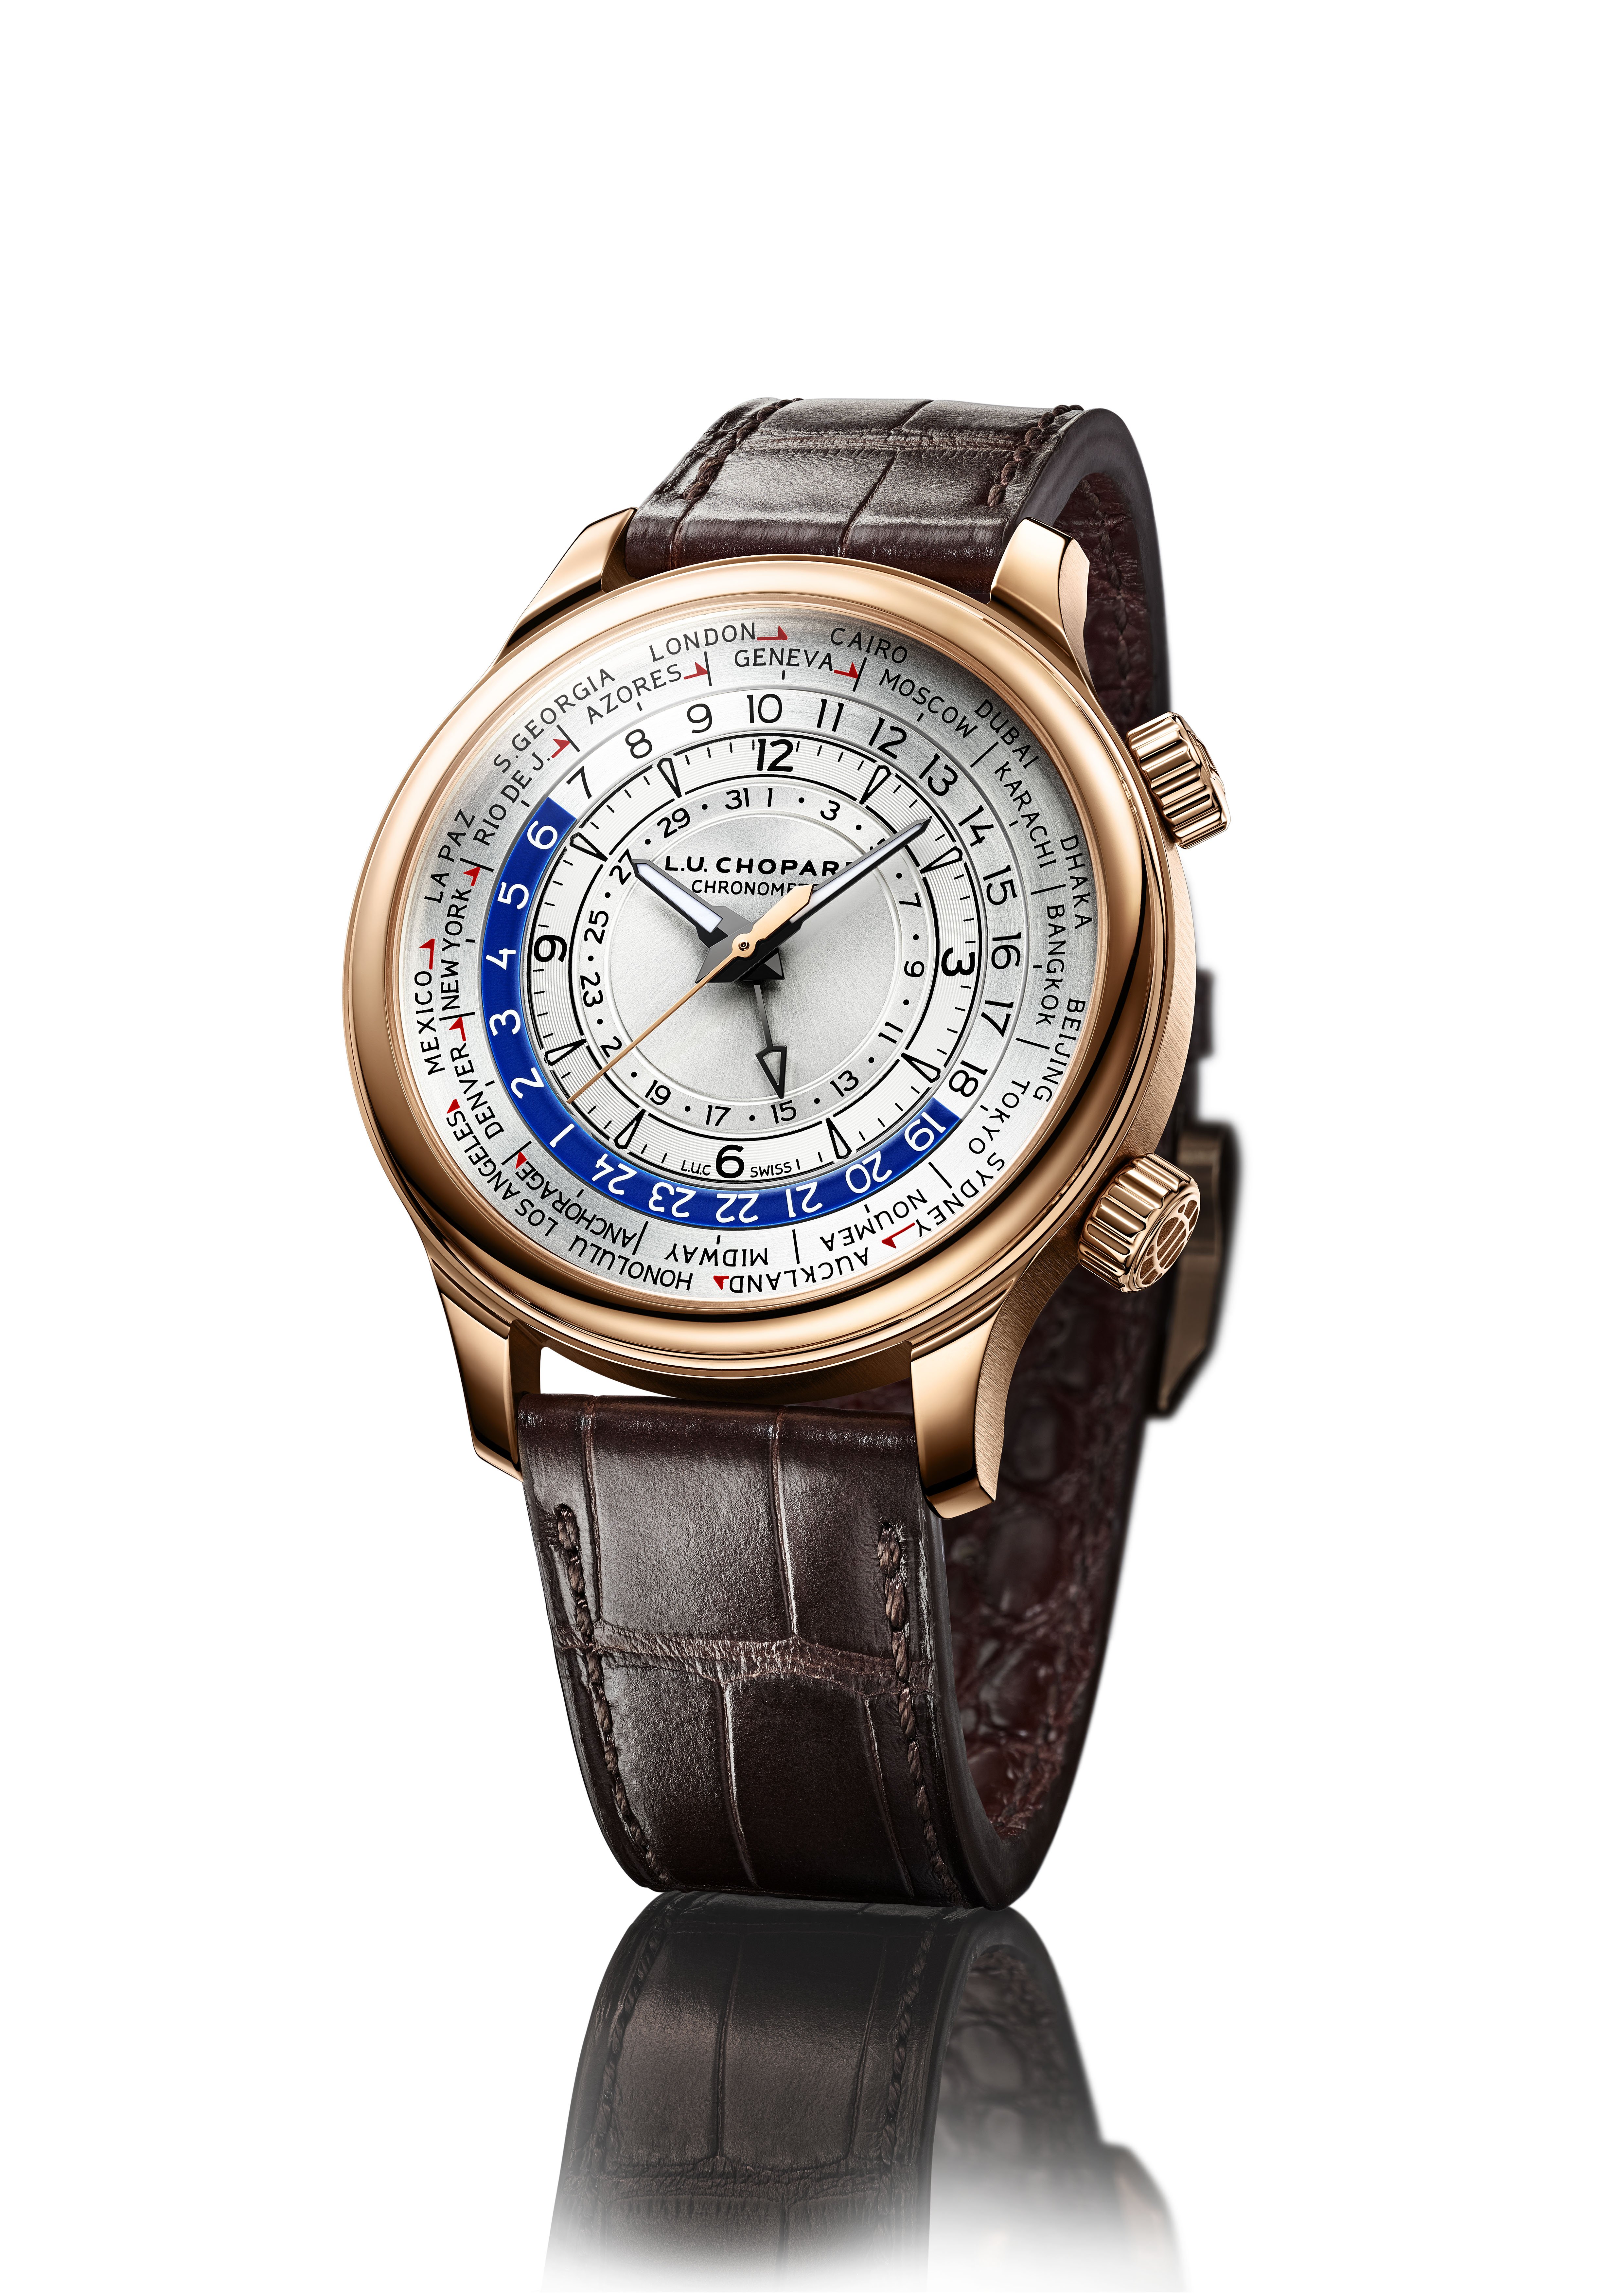 World time watches. Chopard manufacture часы.